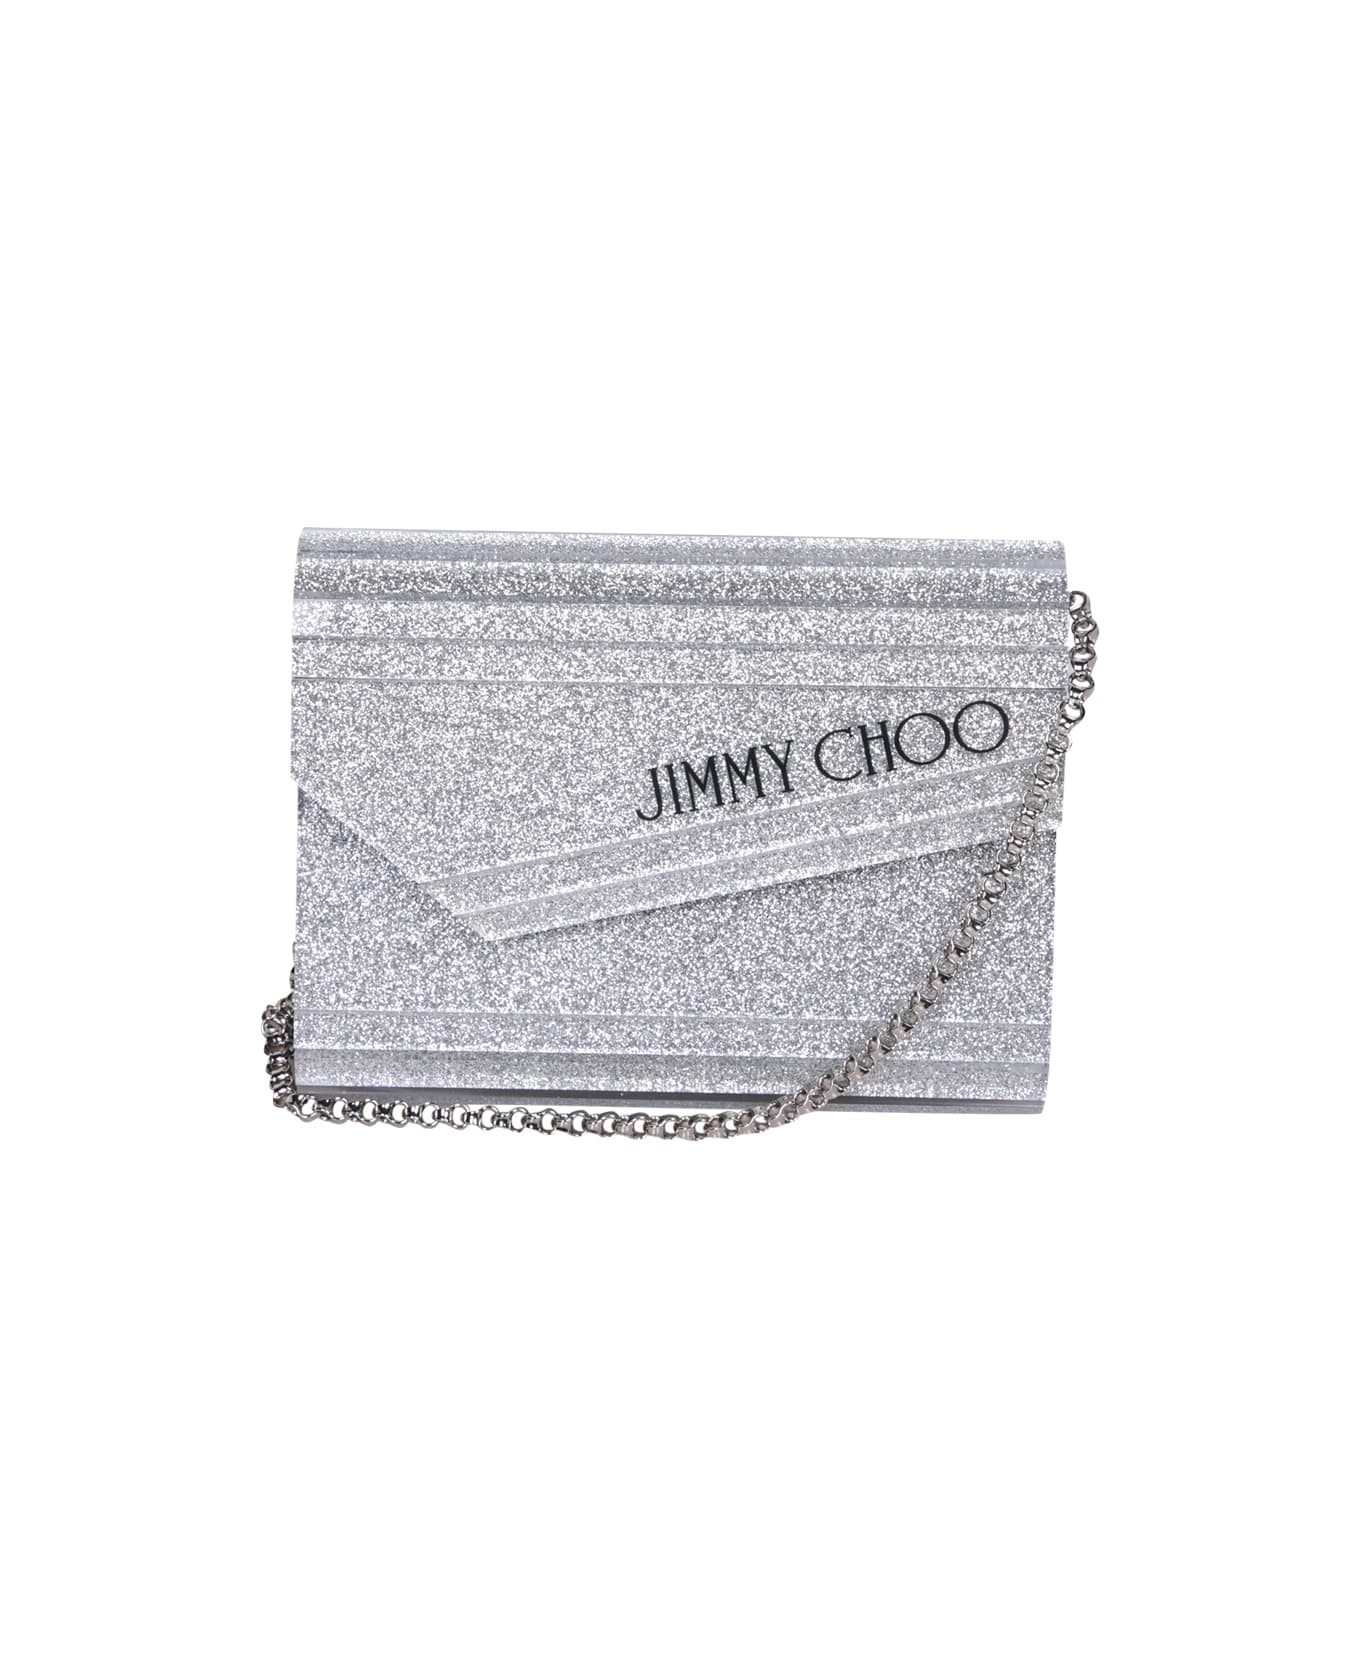 Jimmy Choo Candy Glitter Silver - Metallic